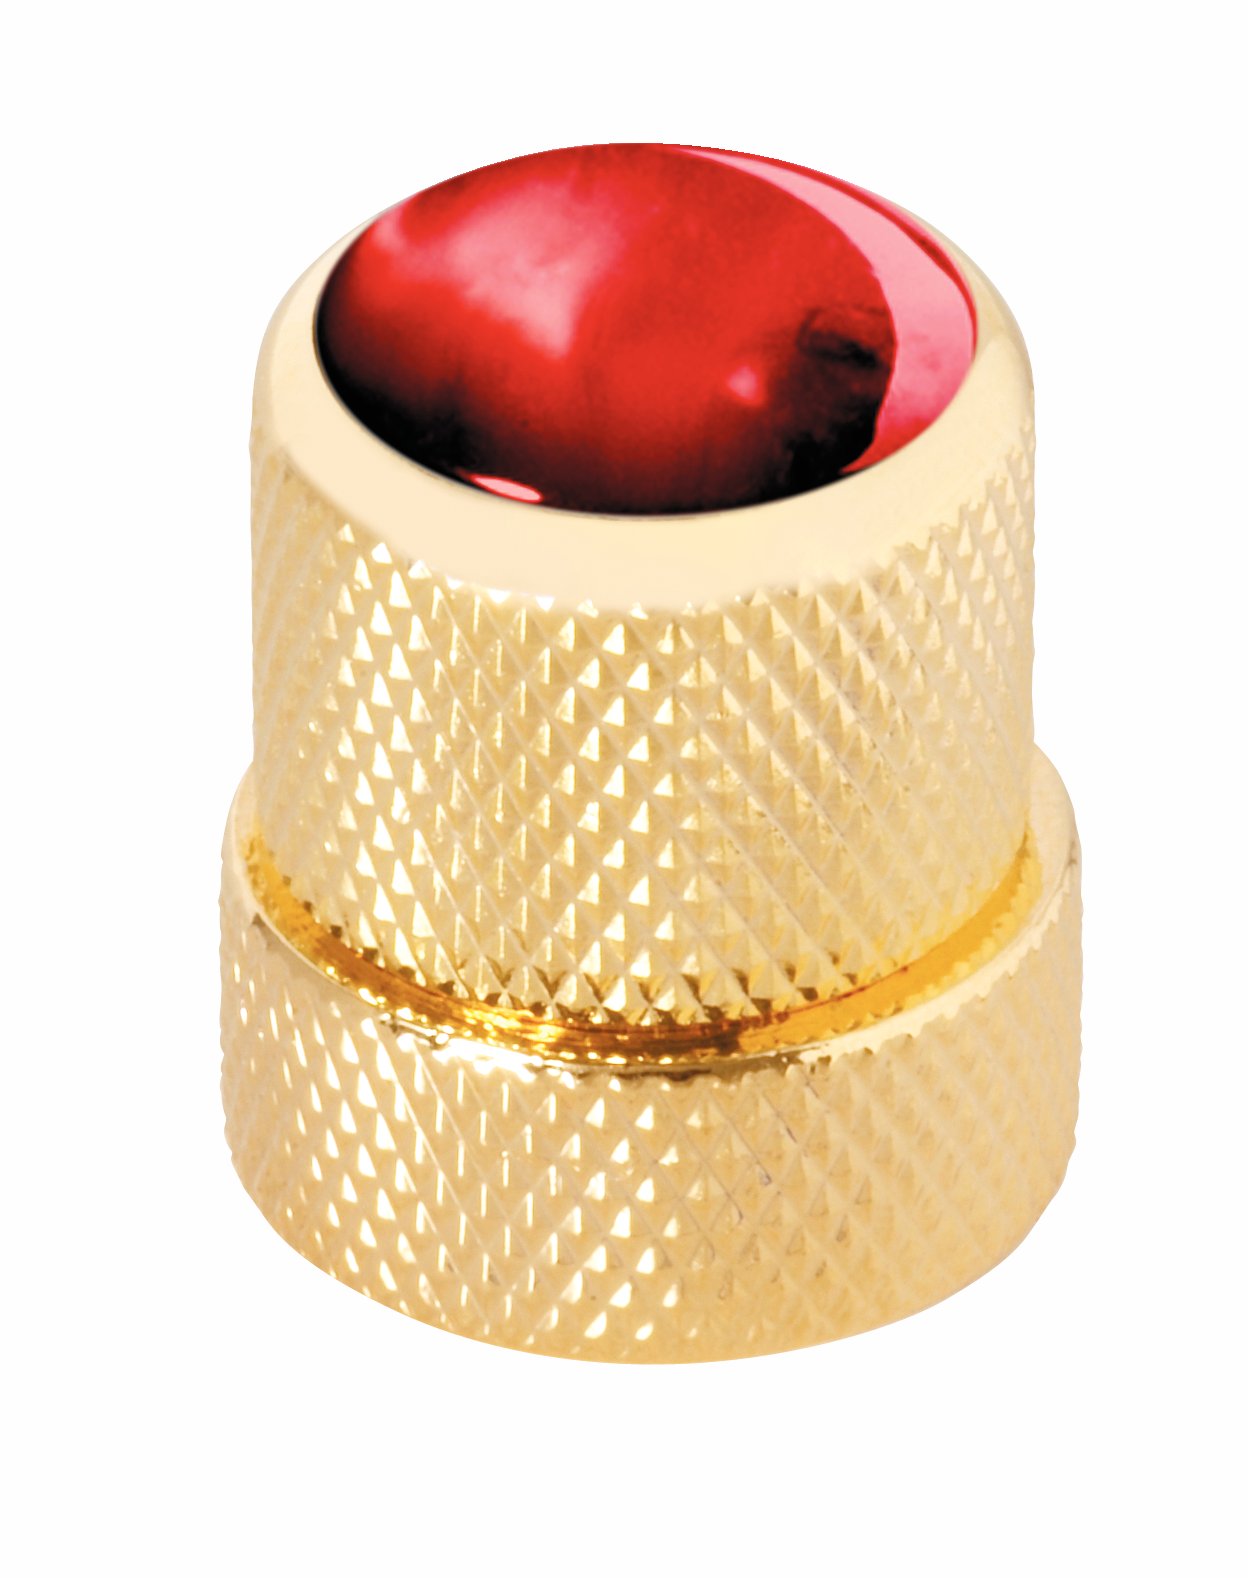 Framus & Warwick - Stacked Potentiometer Dome Knob, Red Perloid, Cap - Gold